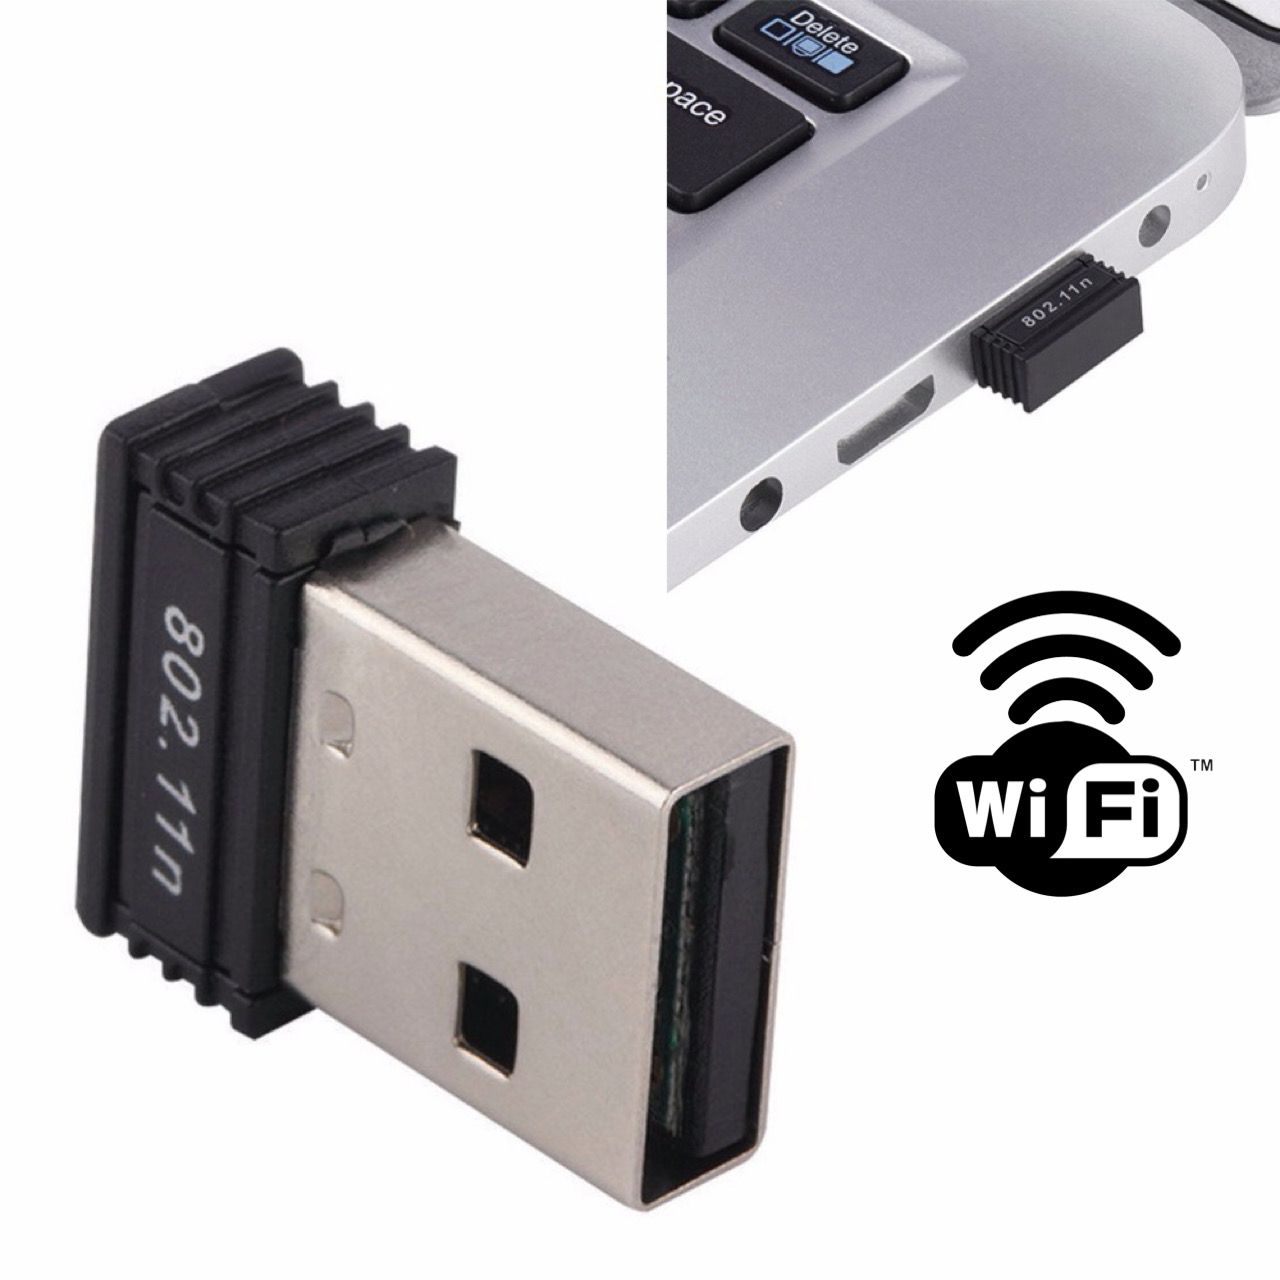 Receptor Wi-Fi / Adaptador Wi-Fi Red Inalámbrica para Computadora Conexión USB ELE-GATE WL.04